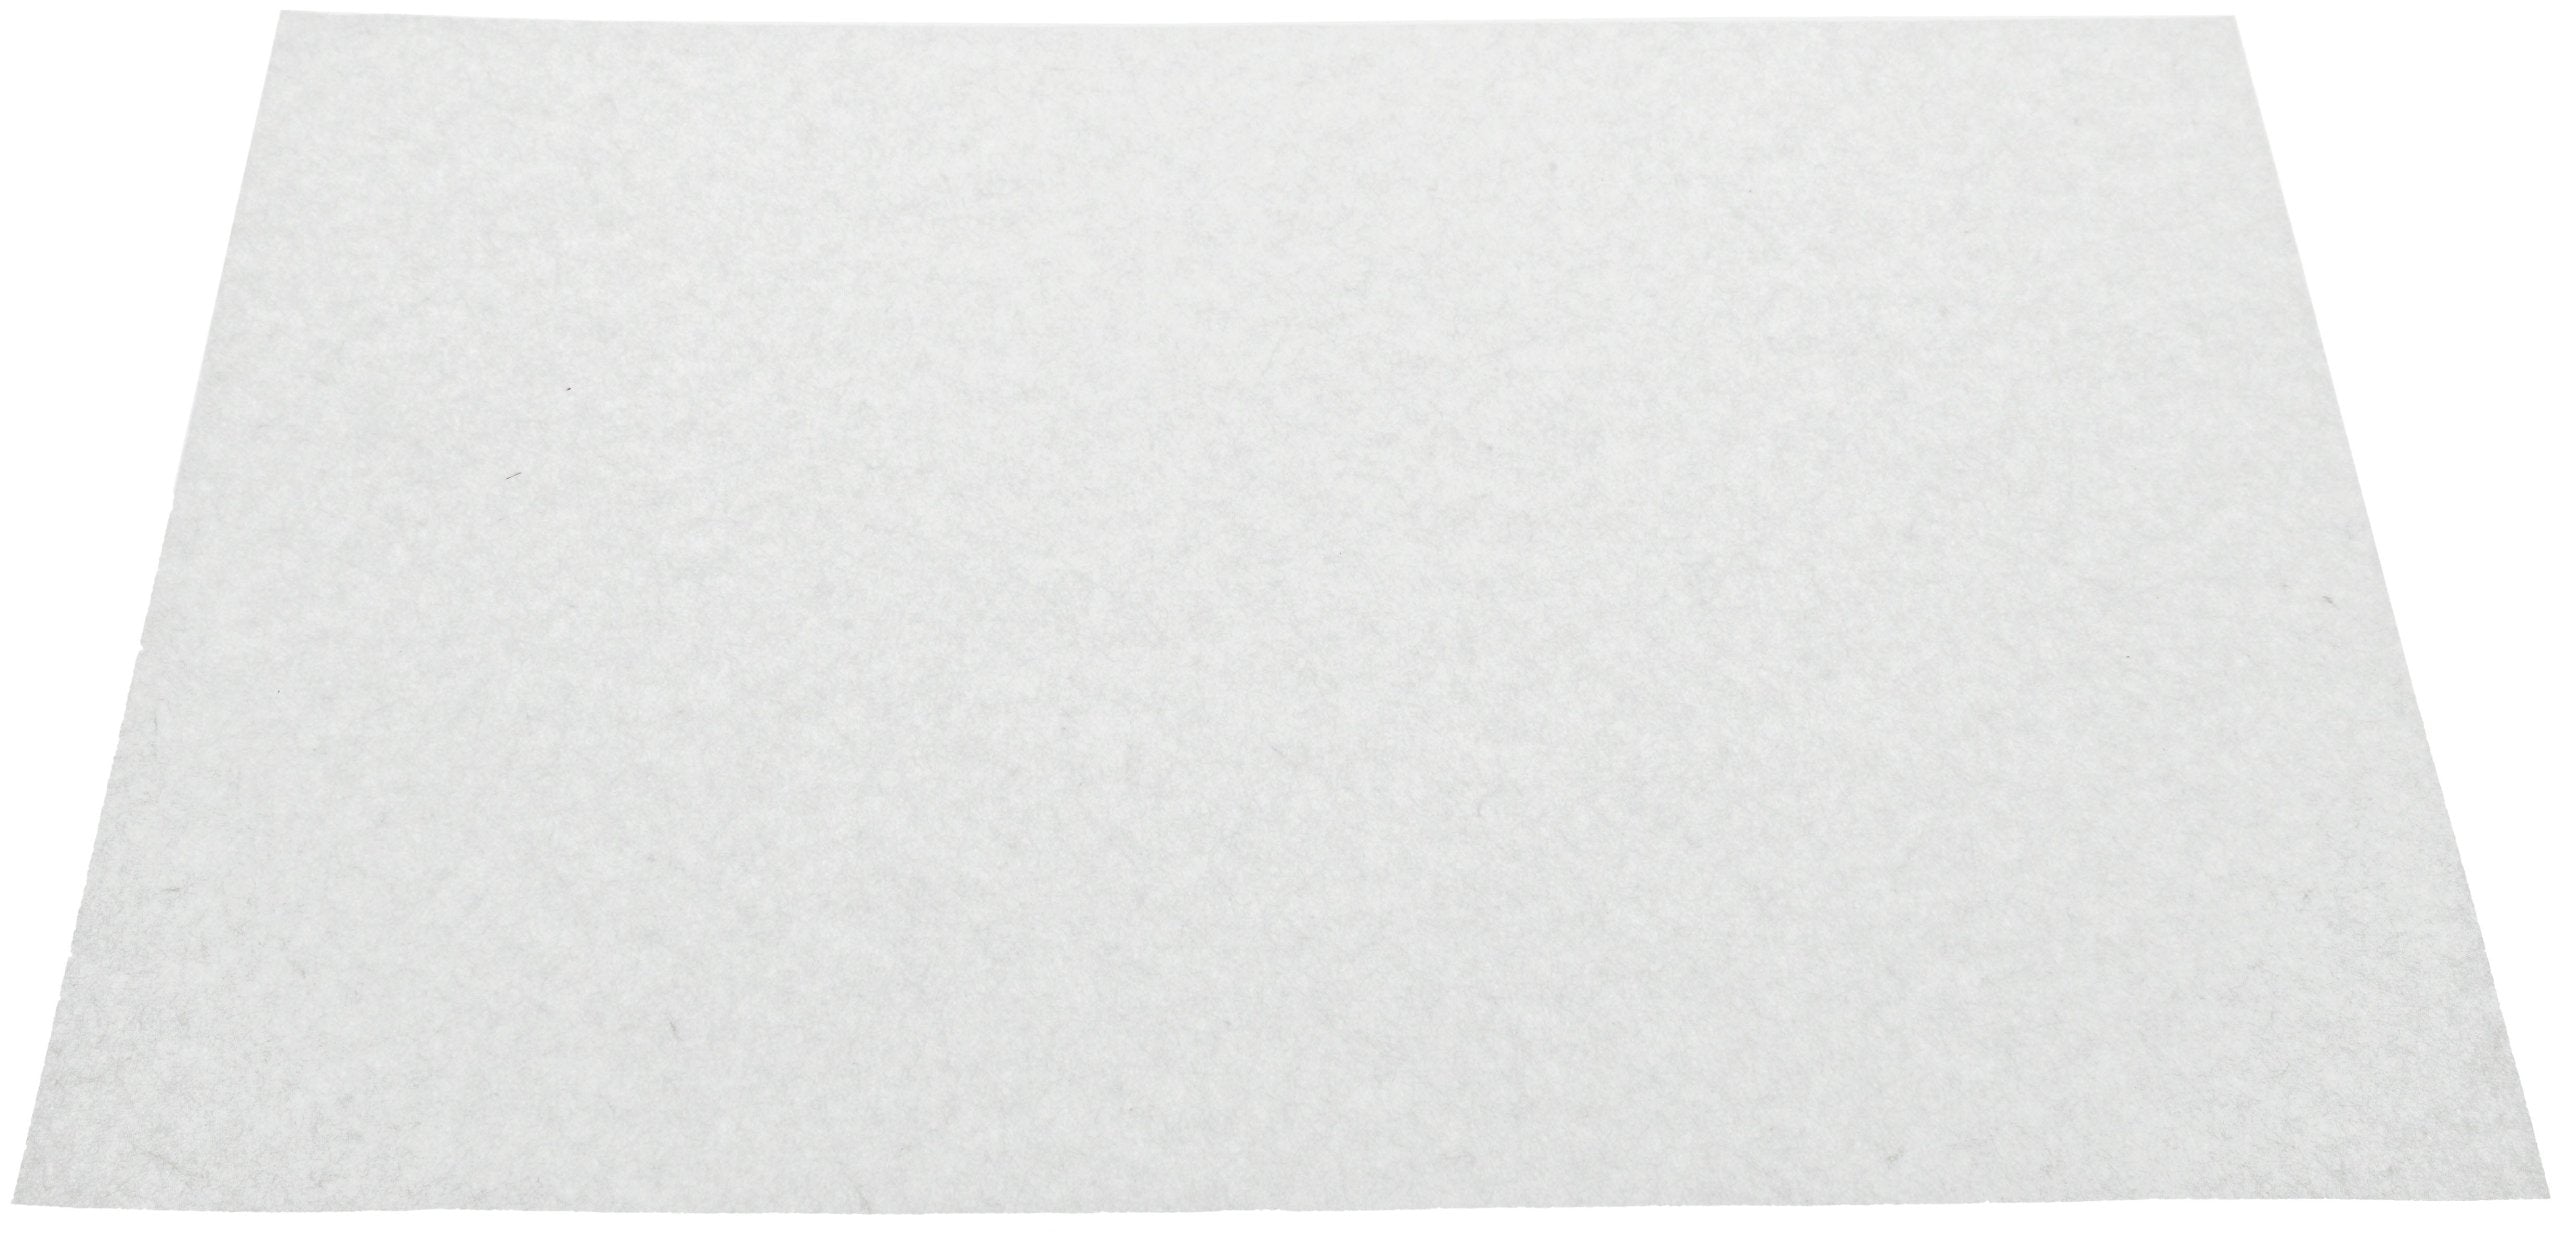 Whatman 10426892 Blotting Paper, Pure Cellulose, Grade GB003 Sheets, 58 x 60cm, 50/pk